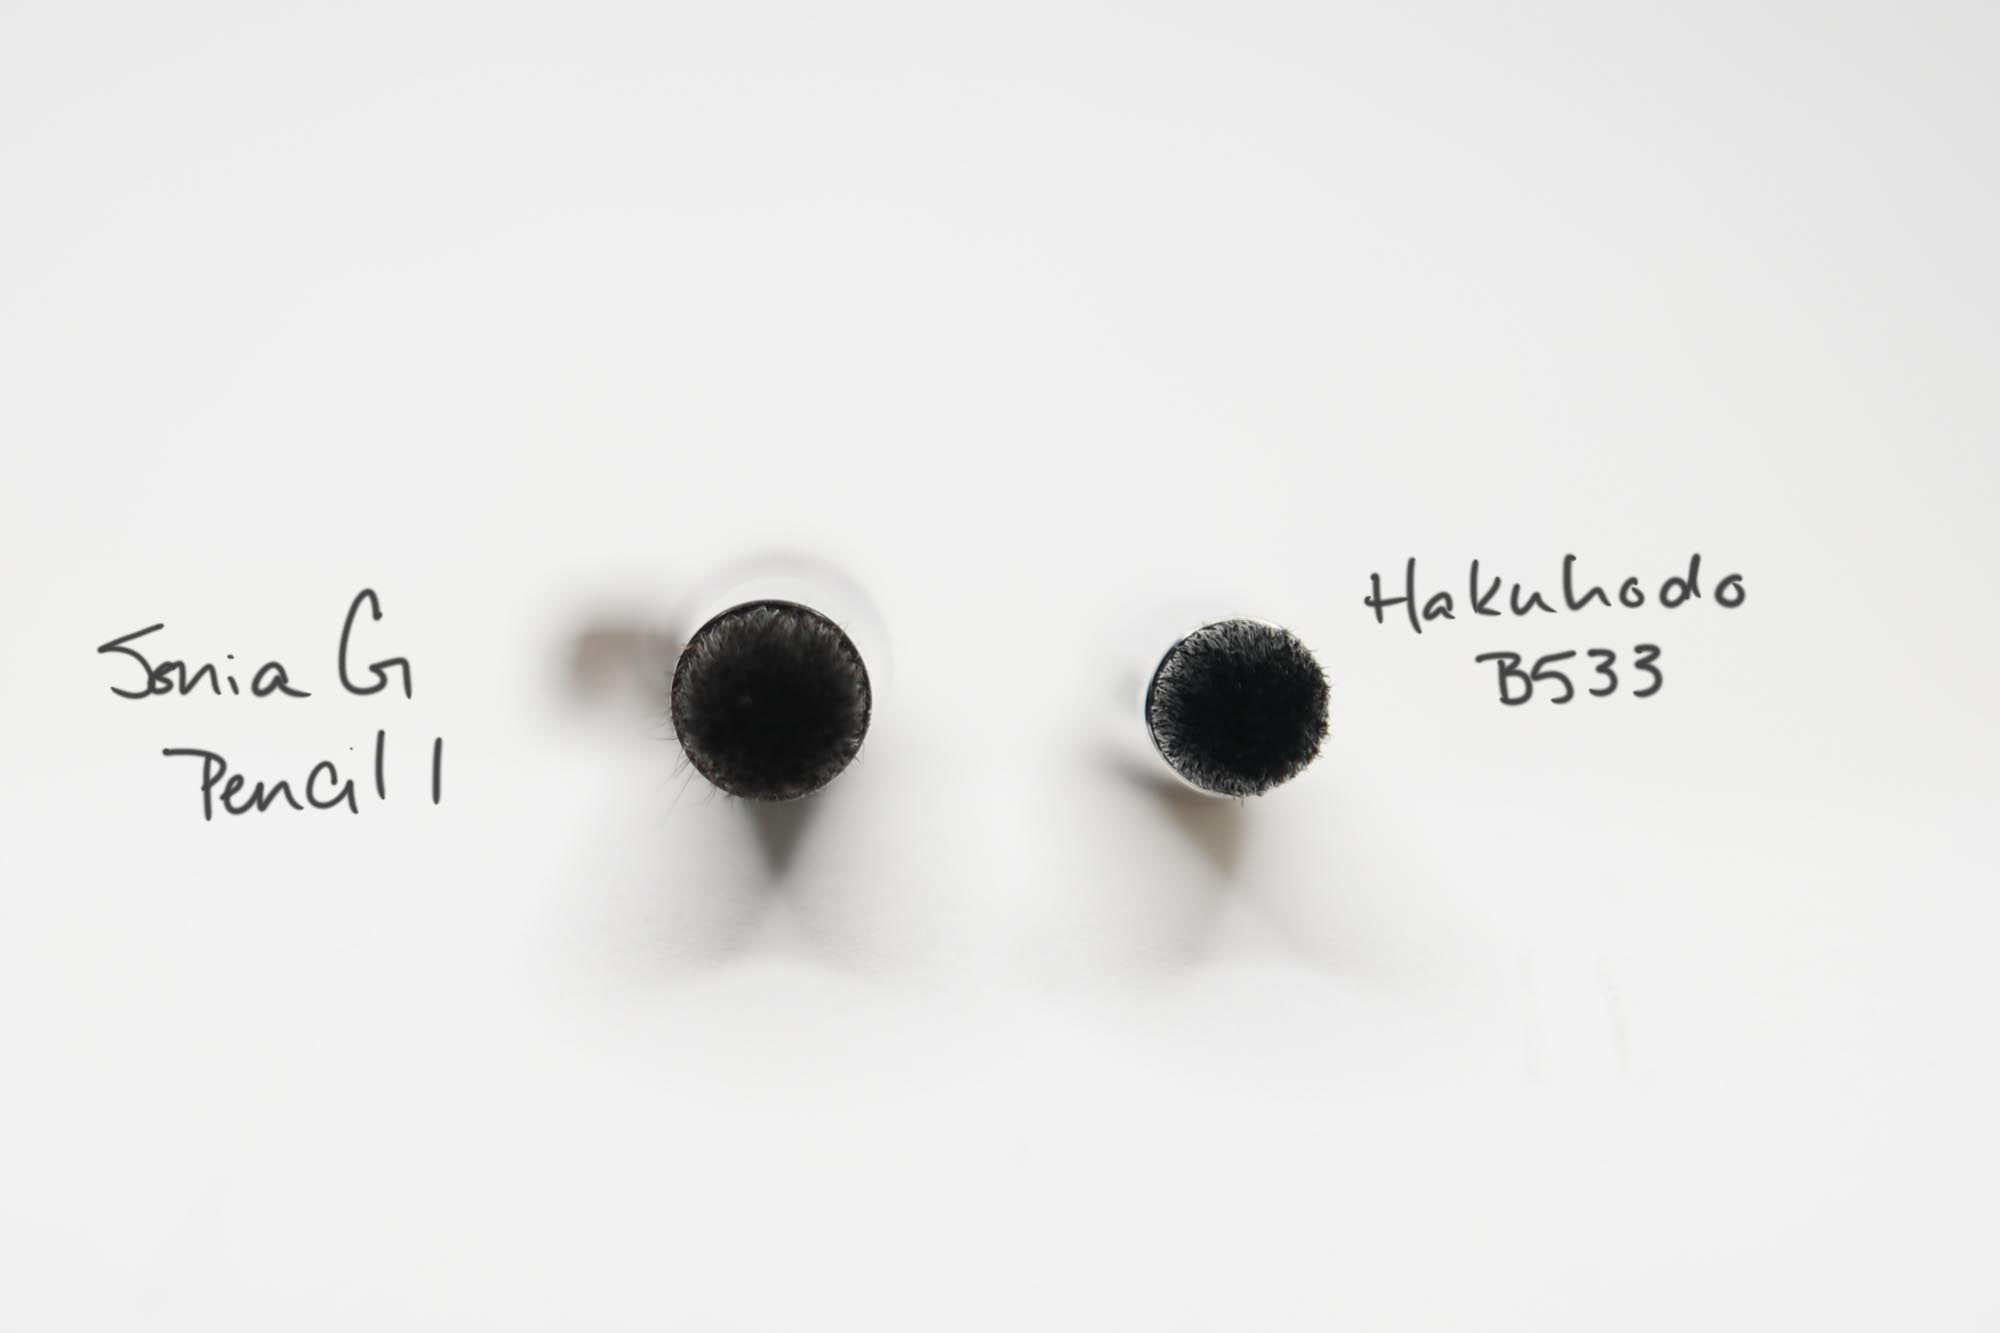 Sonia G Pencil 1 vs Hakuhodo B533